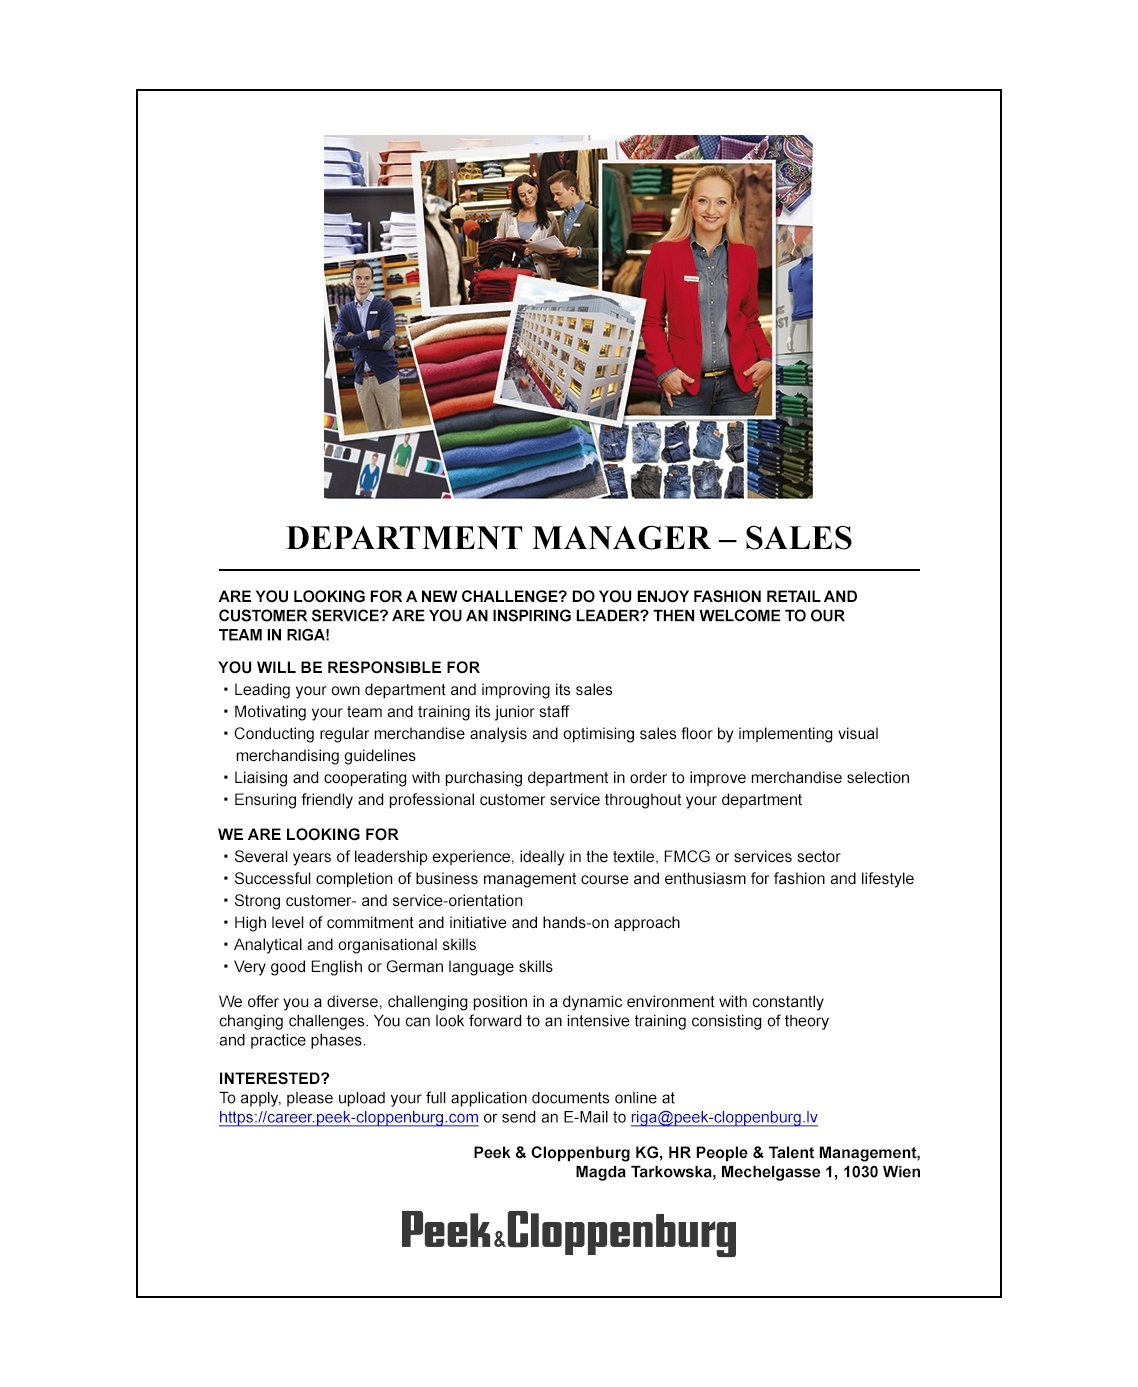 Peek & Cloppenburg, SIA Department Manager - Sales